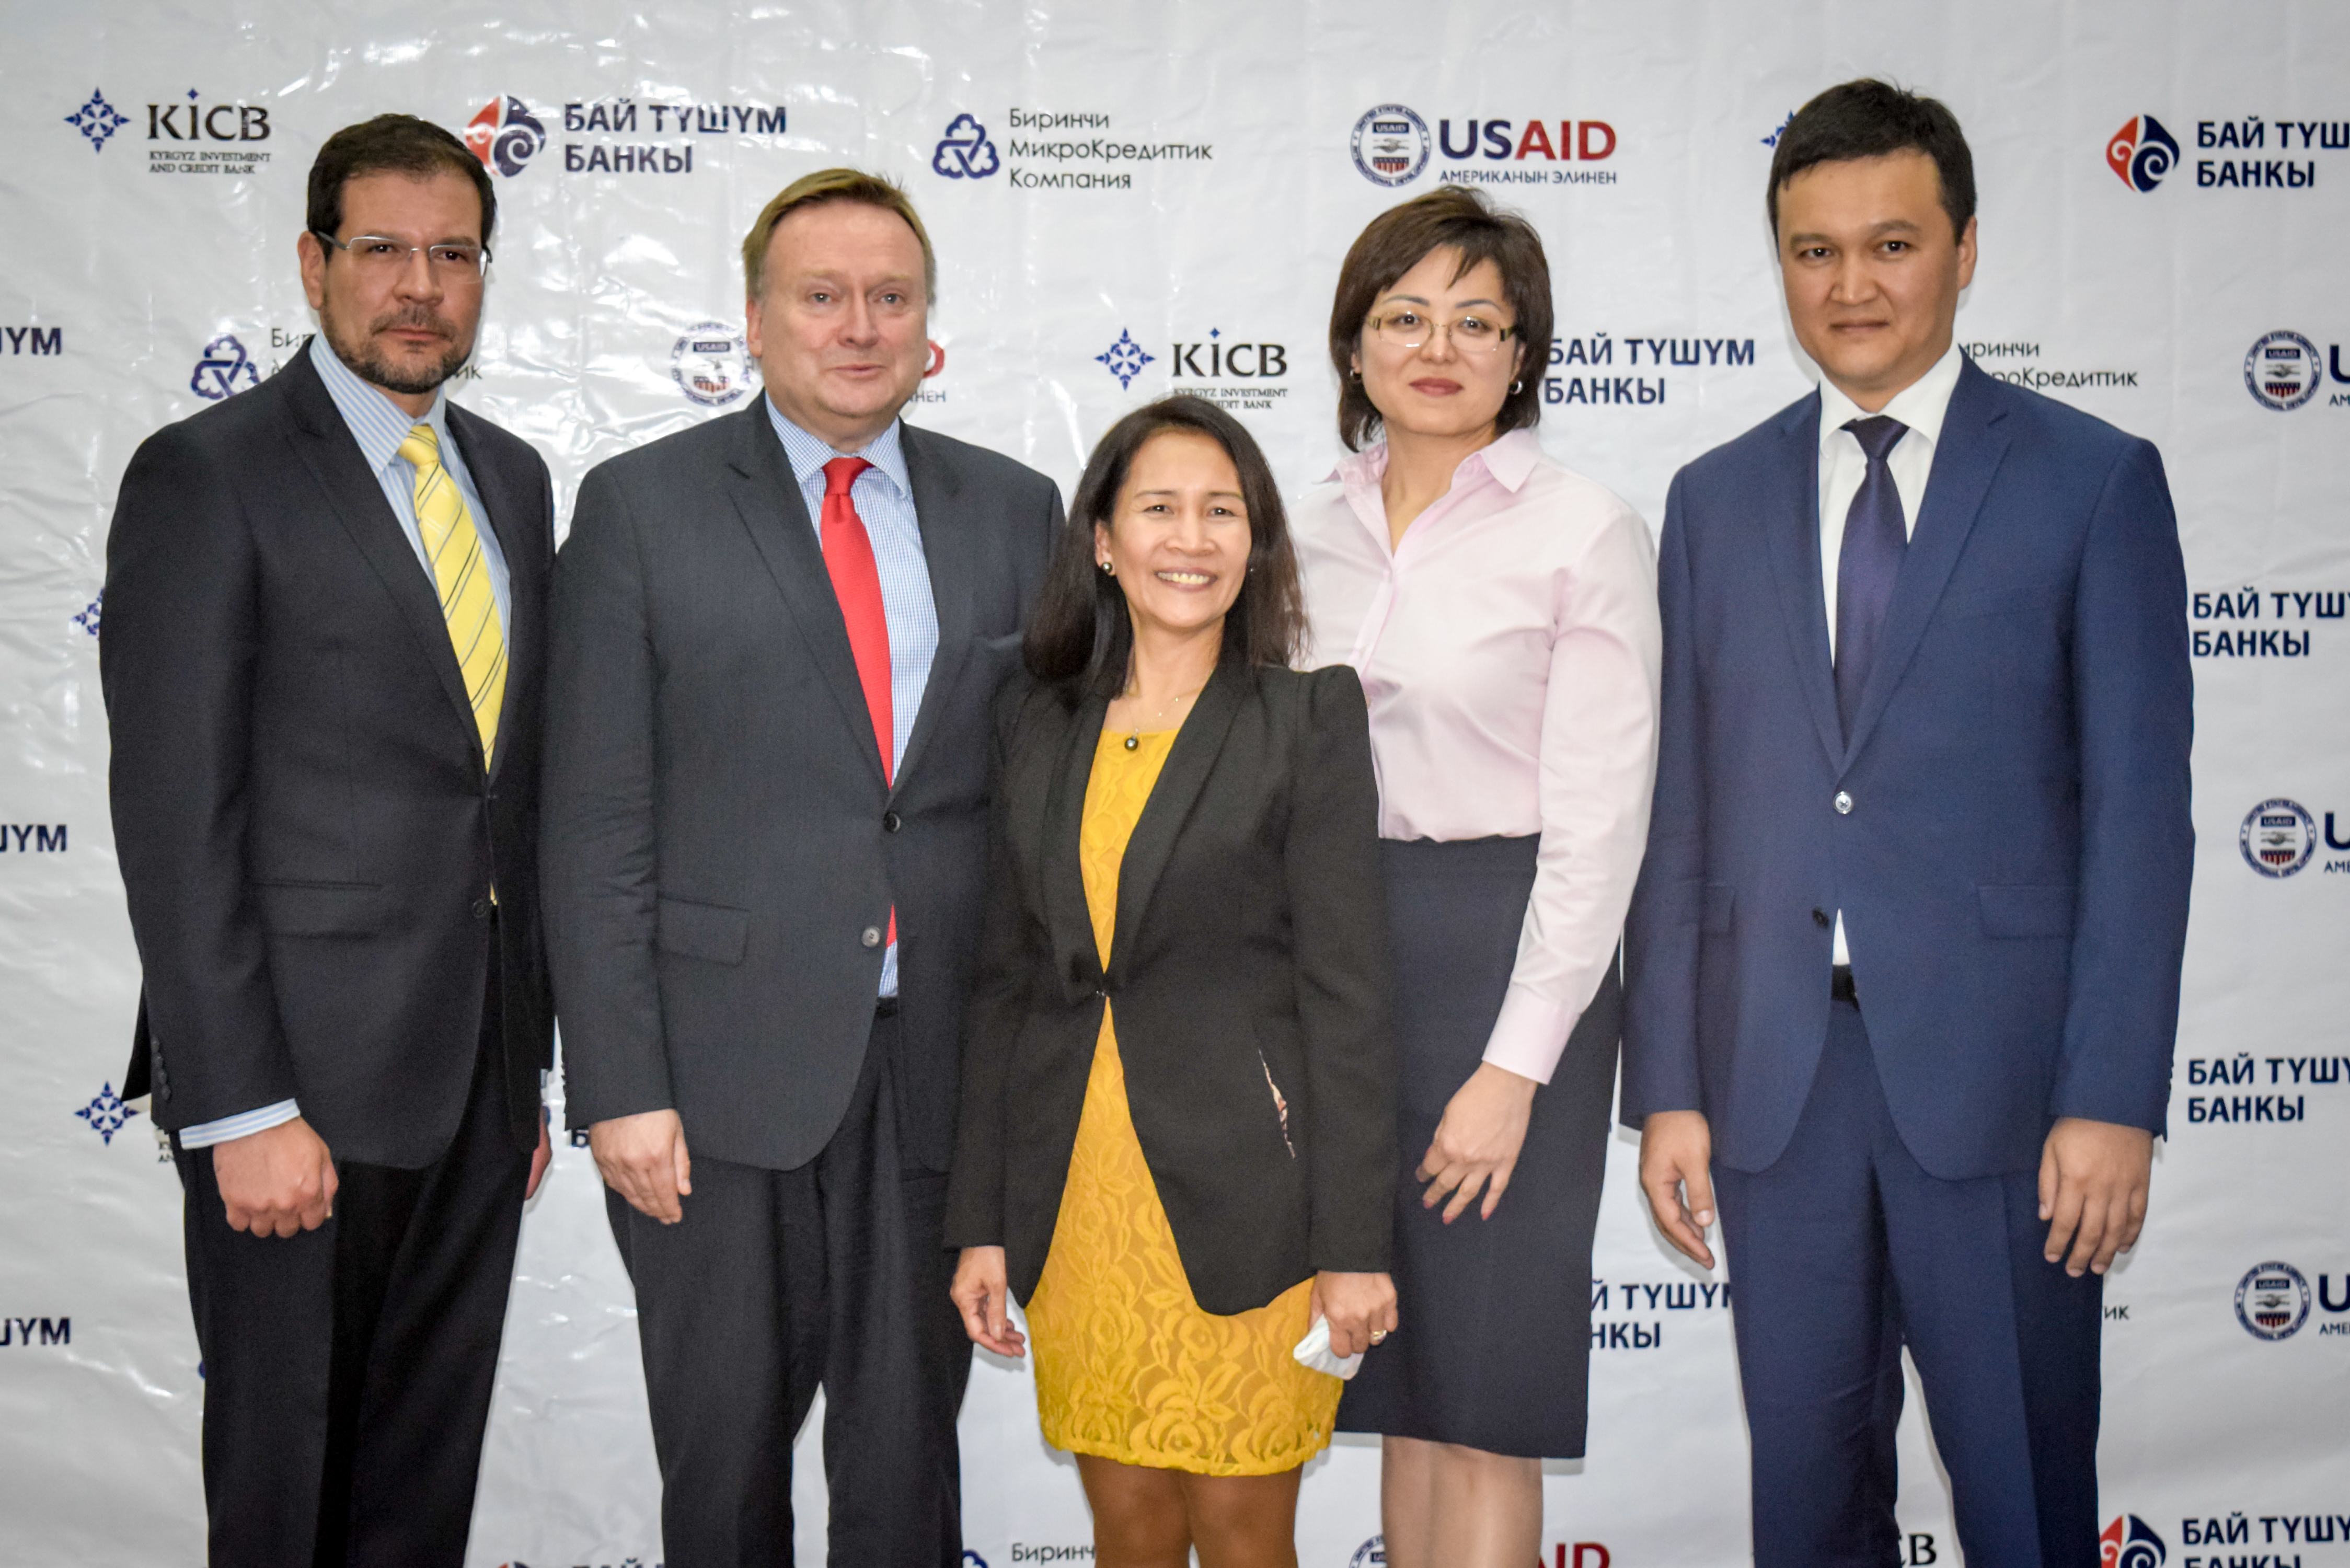 acdi/voca USAID kyrgyzstan AgroHorizon bank partnerships